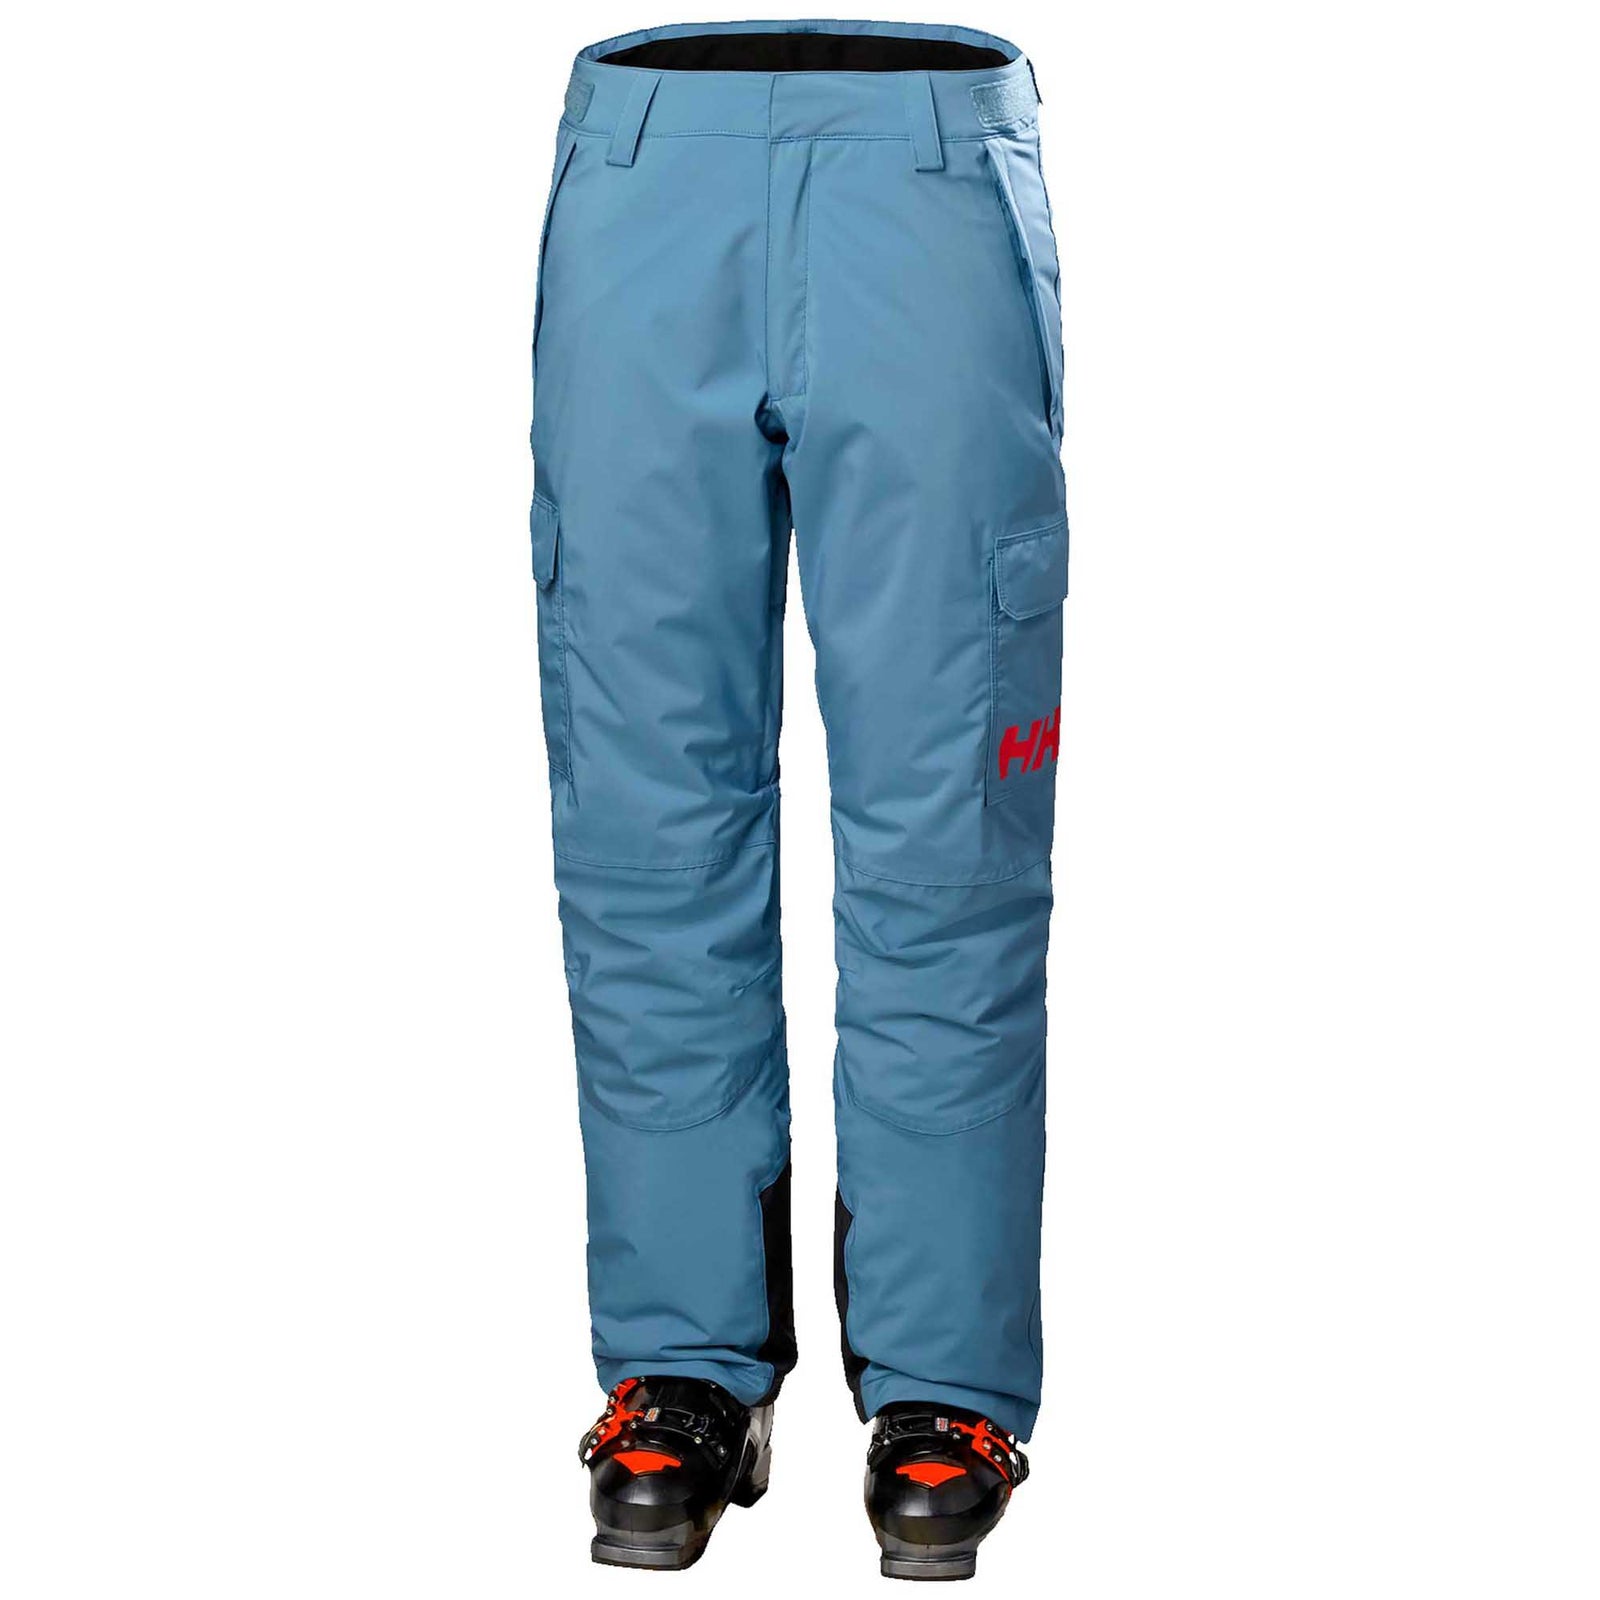 Women's Switch Cargo Insulated Ski Pants